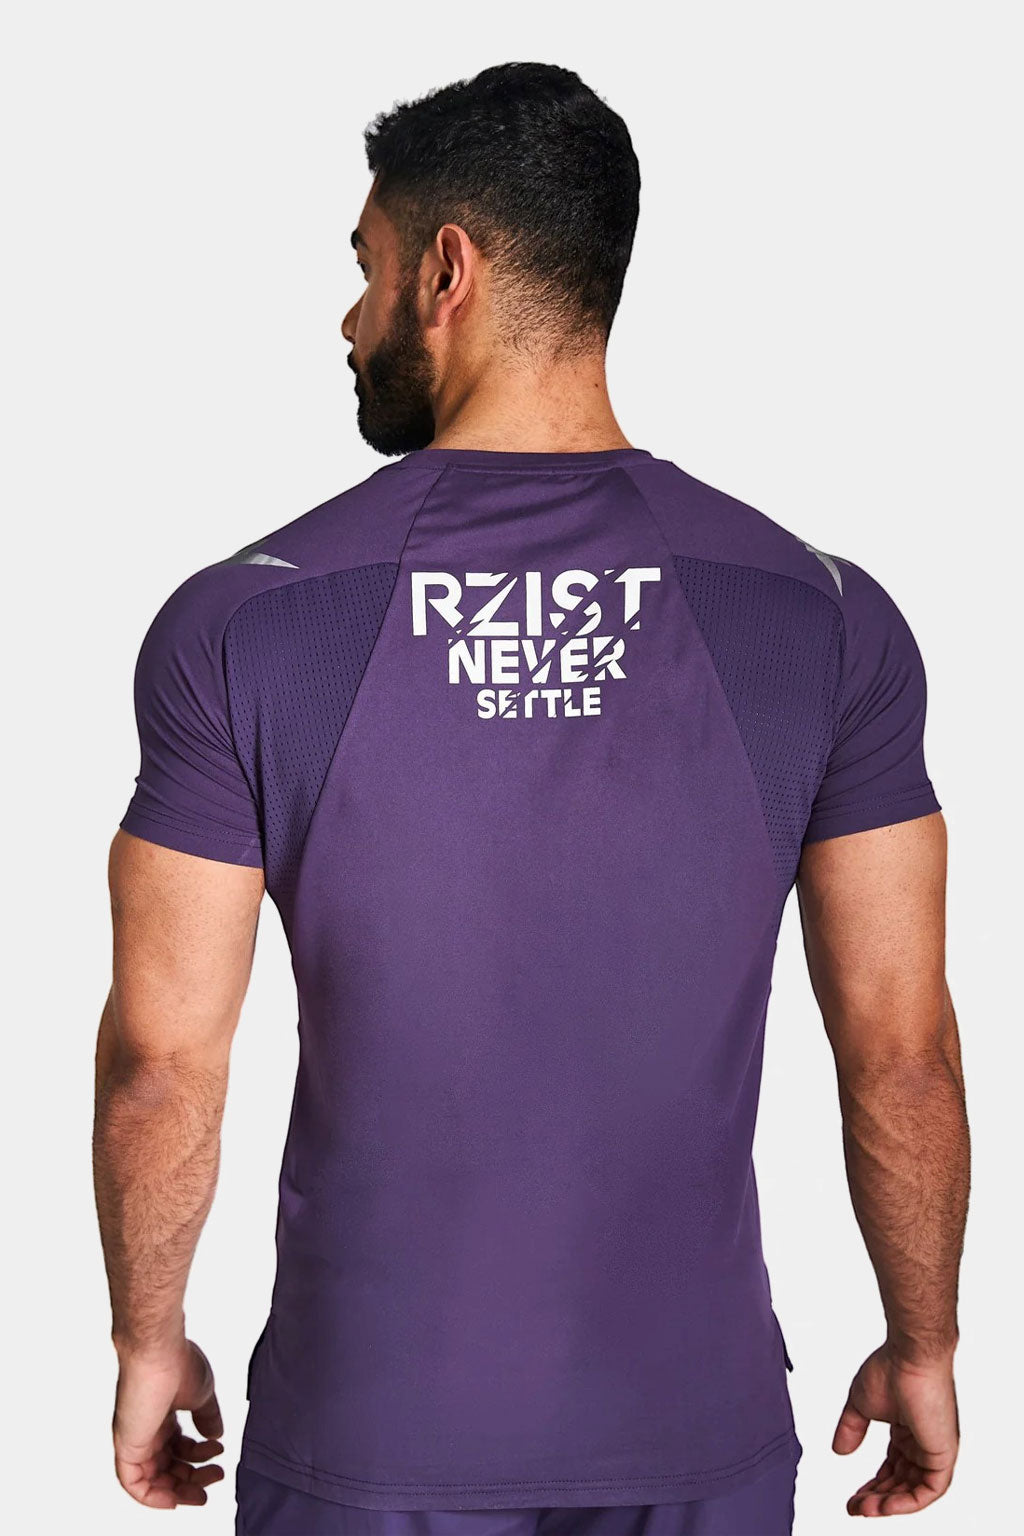 Rzist - Never Settle Men's Performance T-shirt